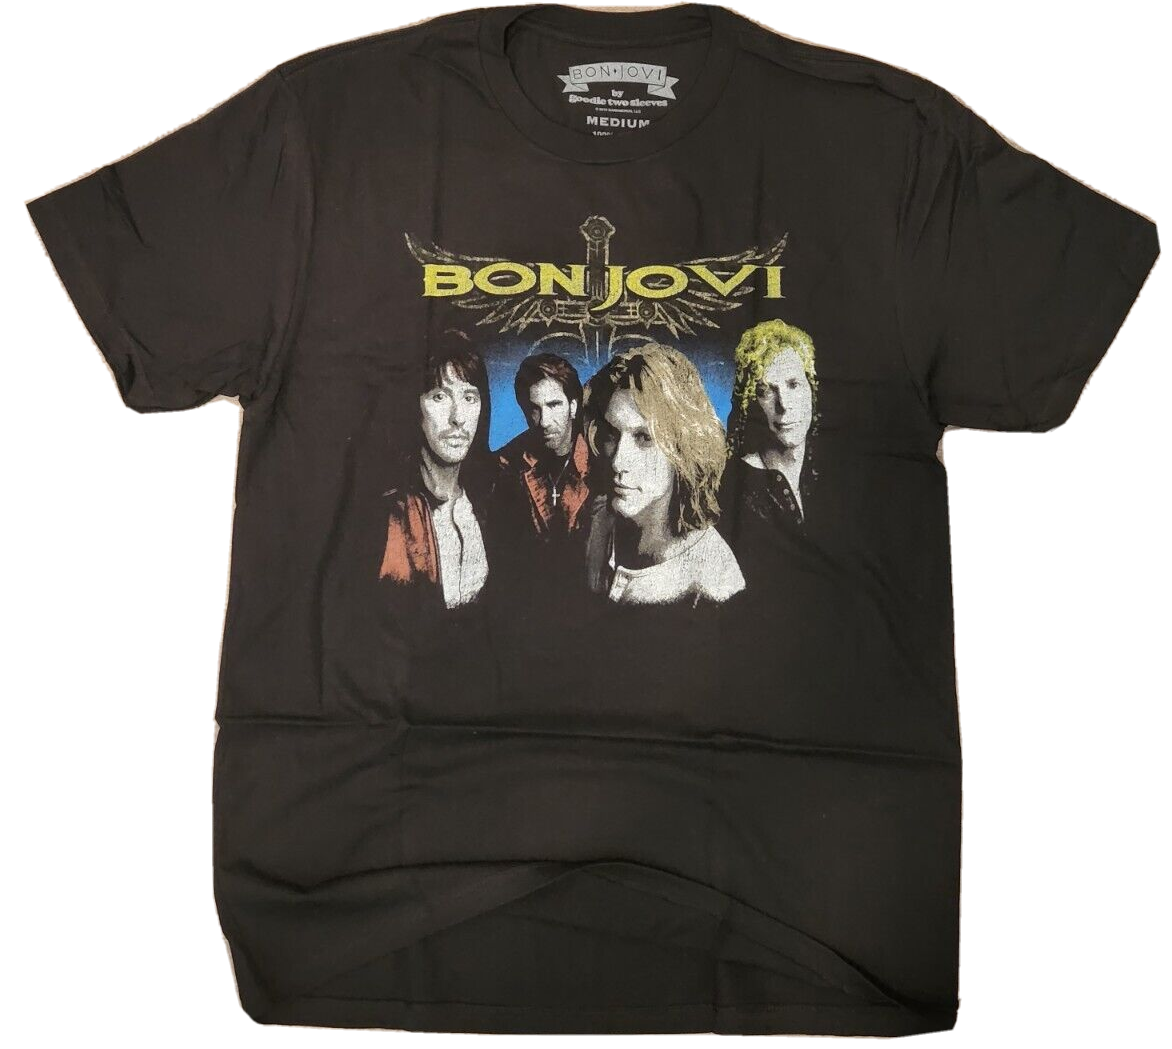 Bon Jovi Music -Tee Shirt MUSIC BAND 100% Cotton Black Reg $28.00